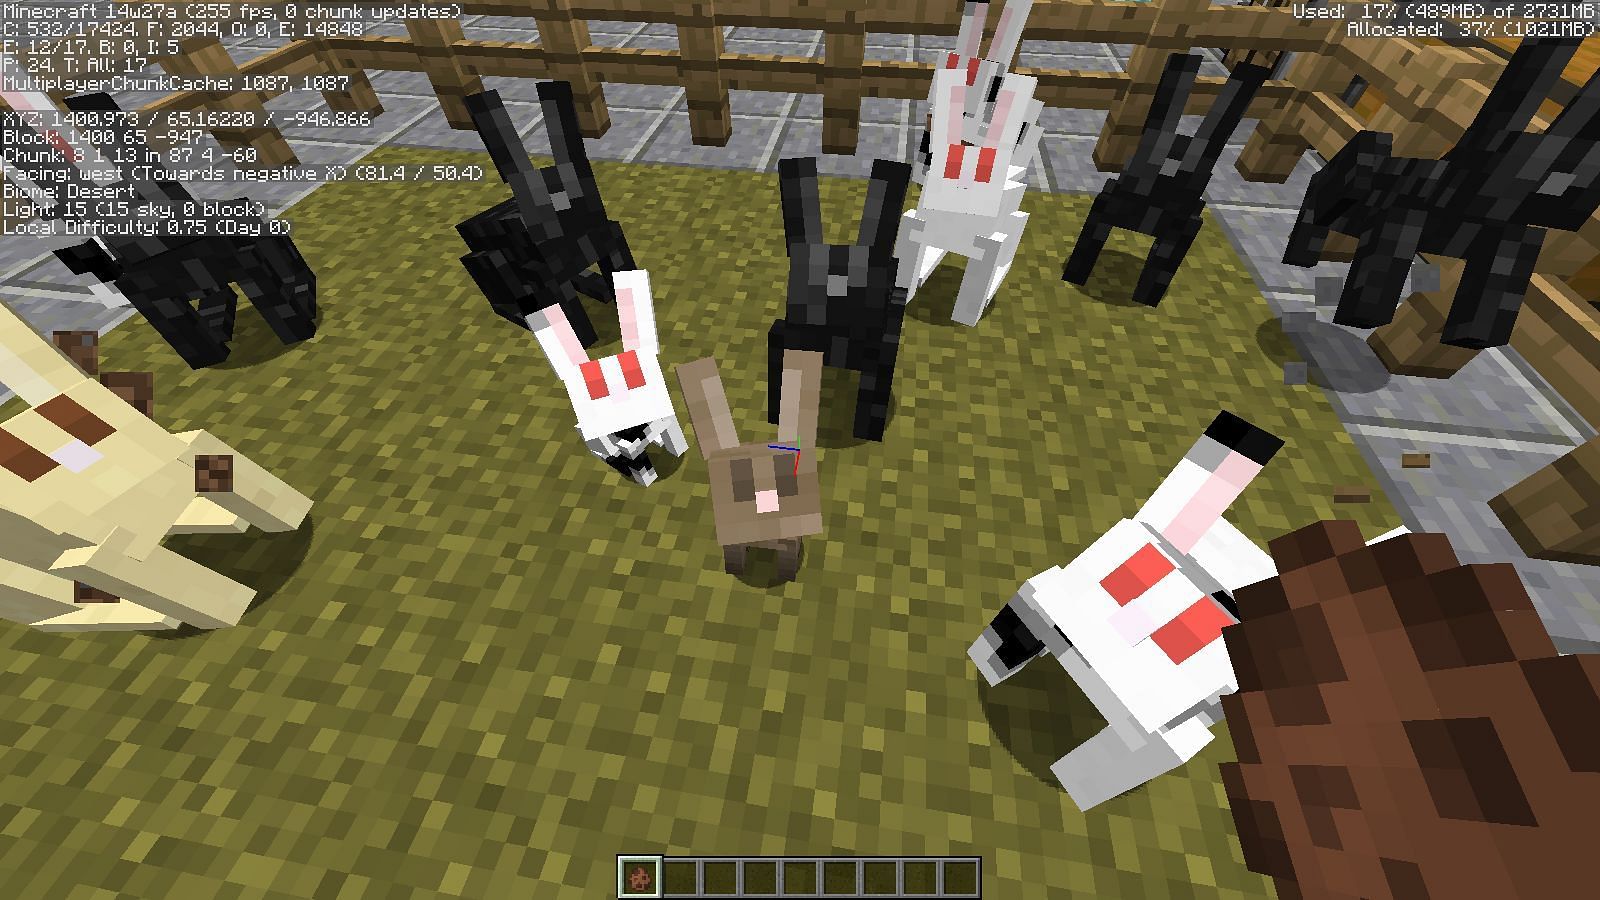 Rabbits (Image via Minecraft)